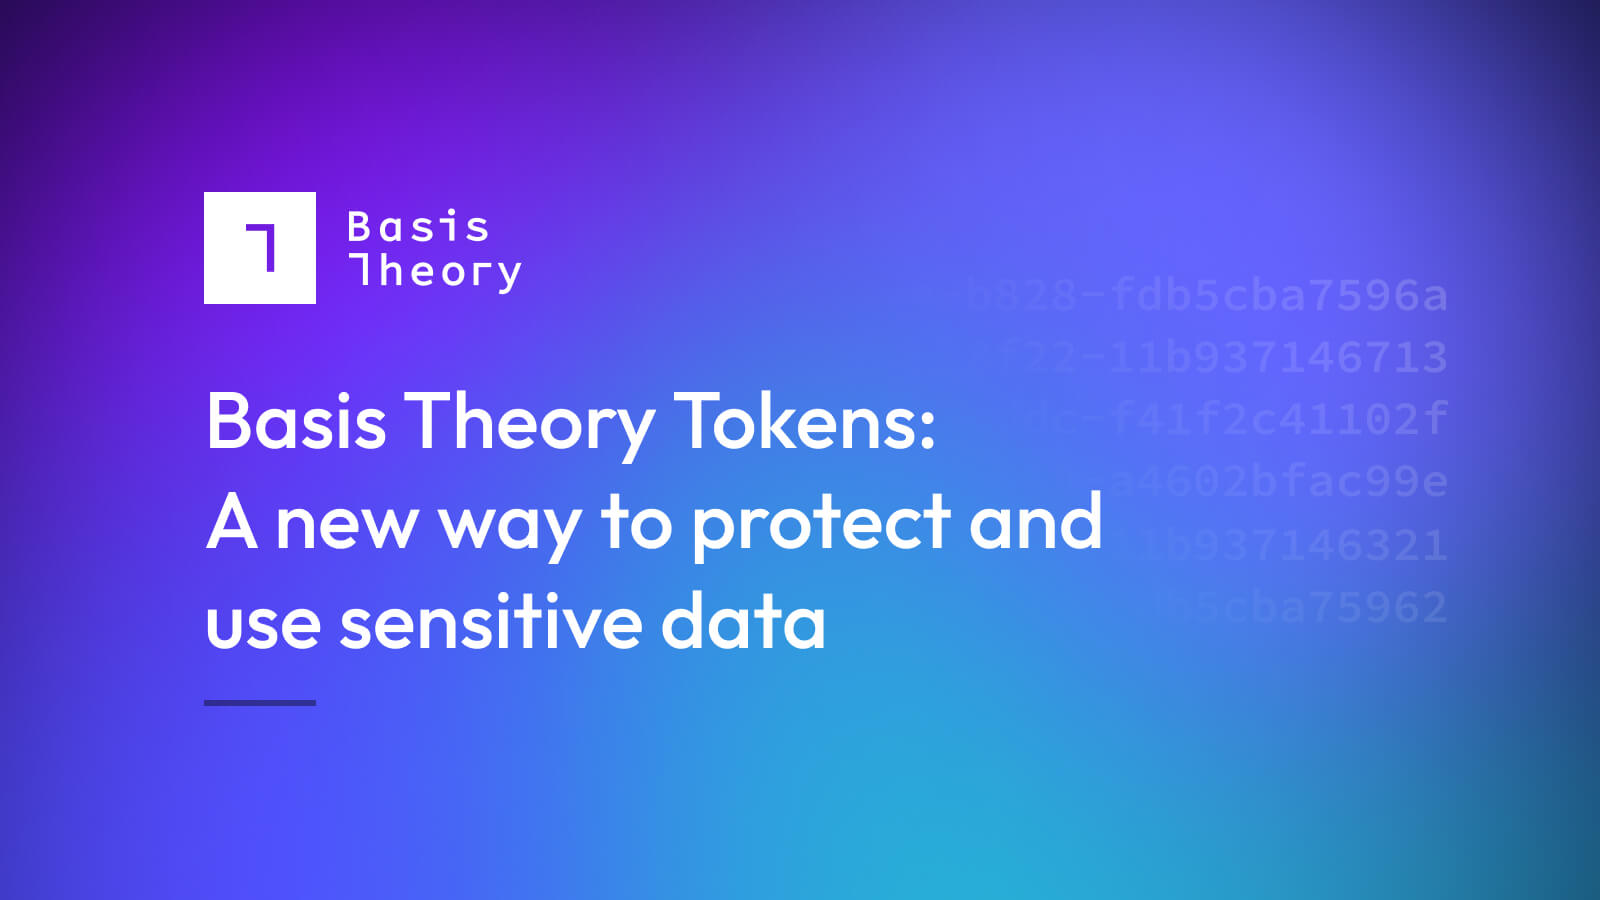 Basis Theory tokens to protect sensitive data